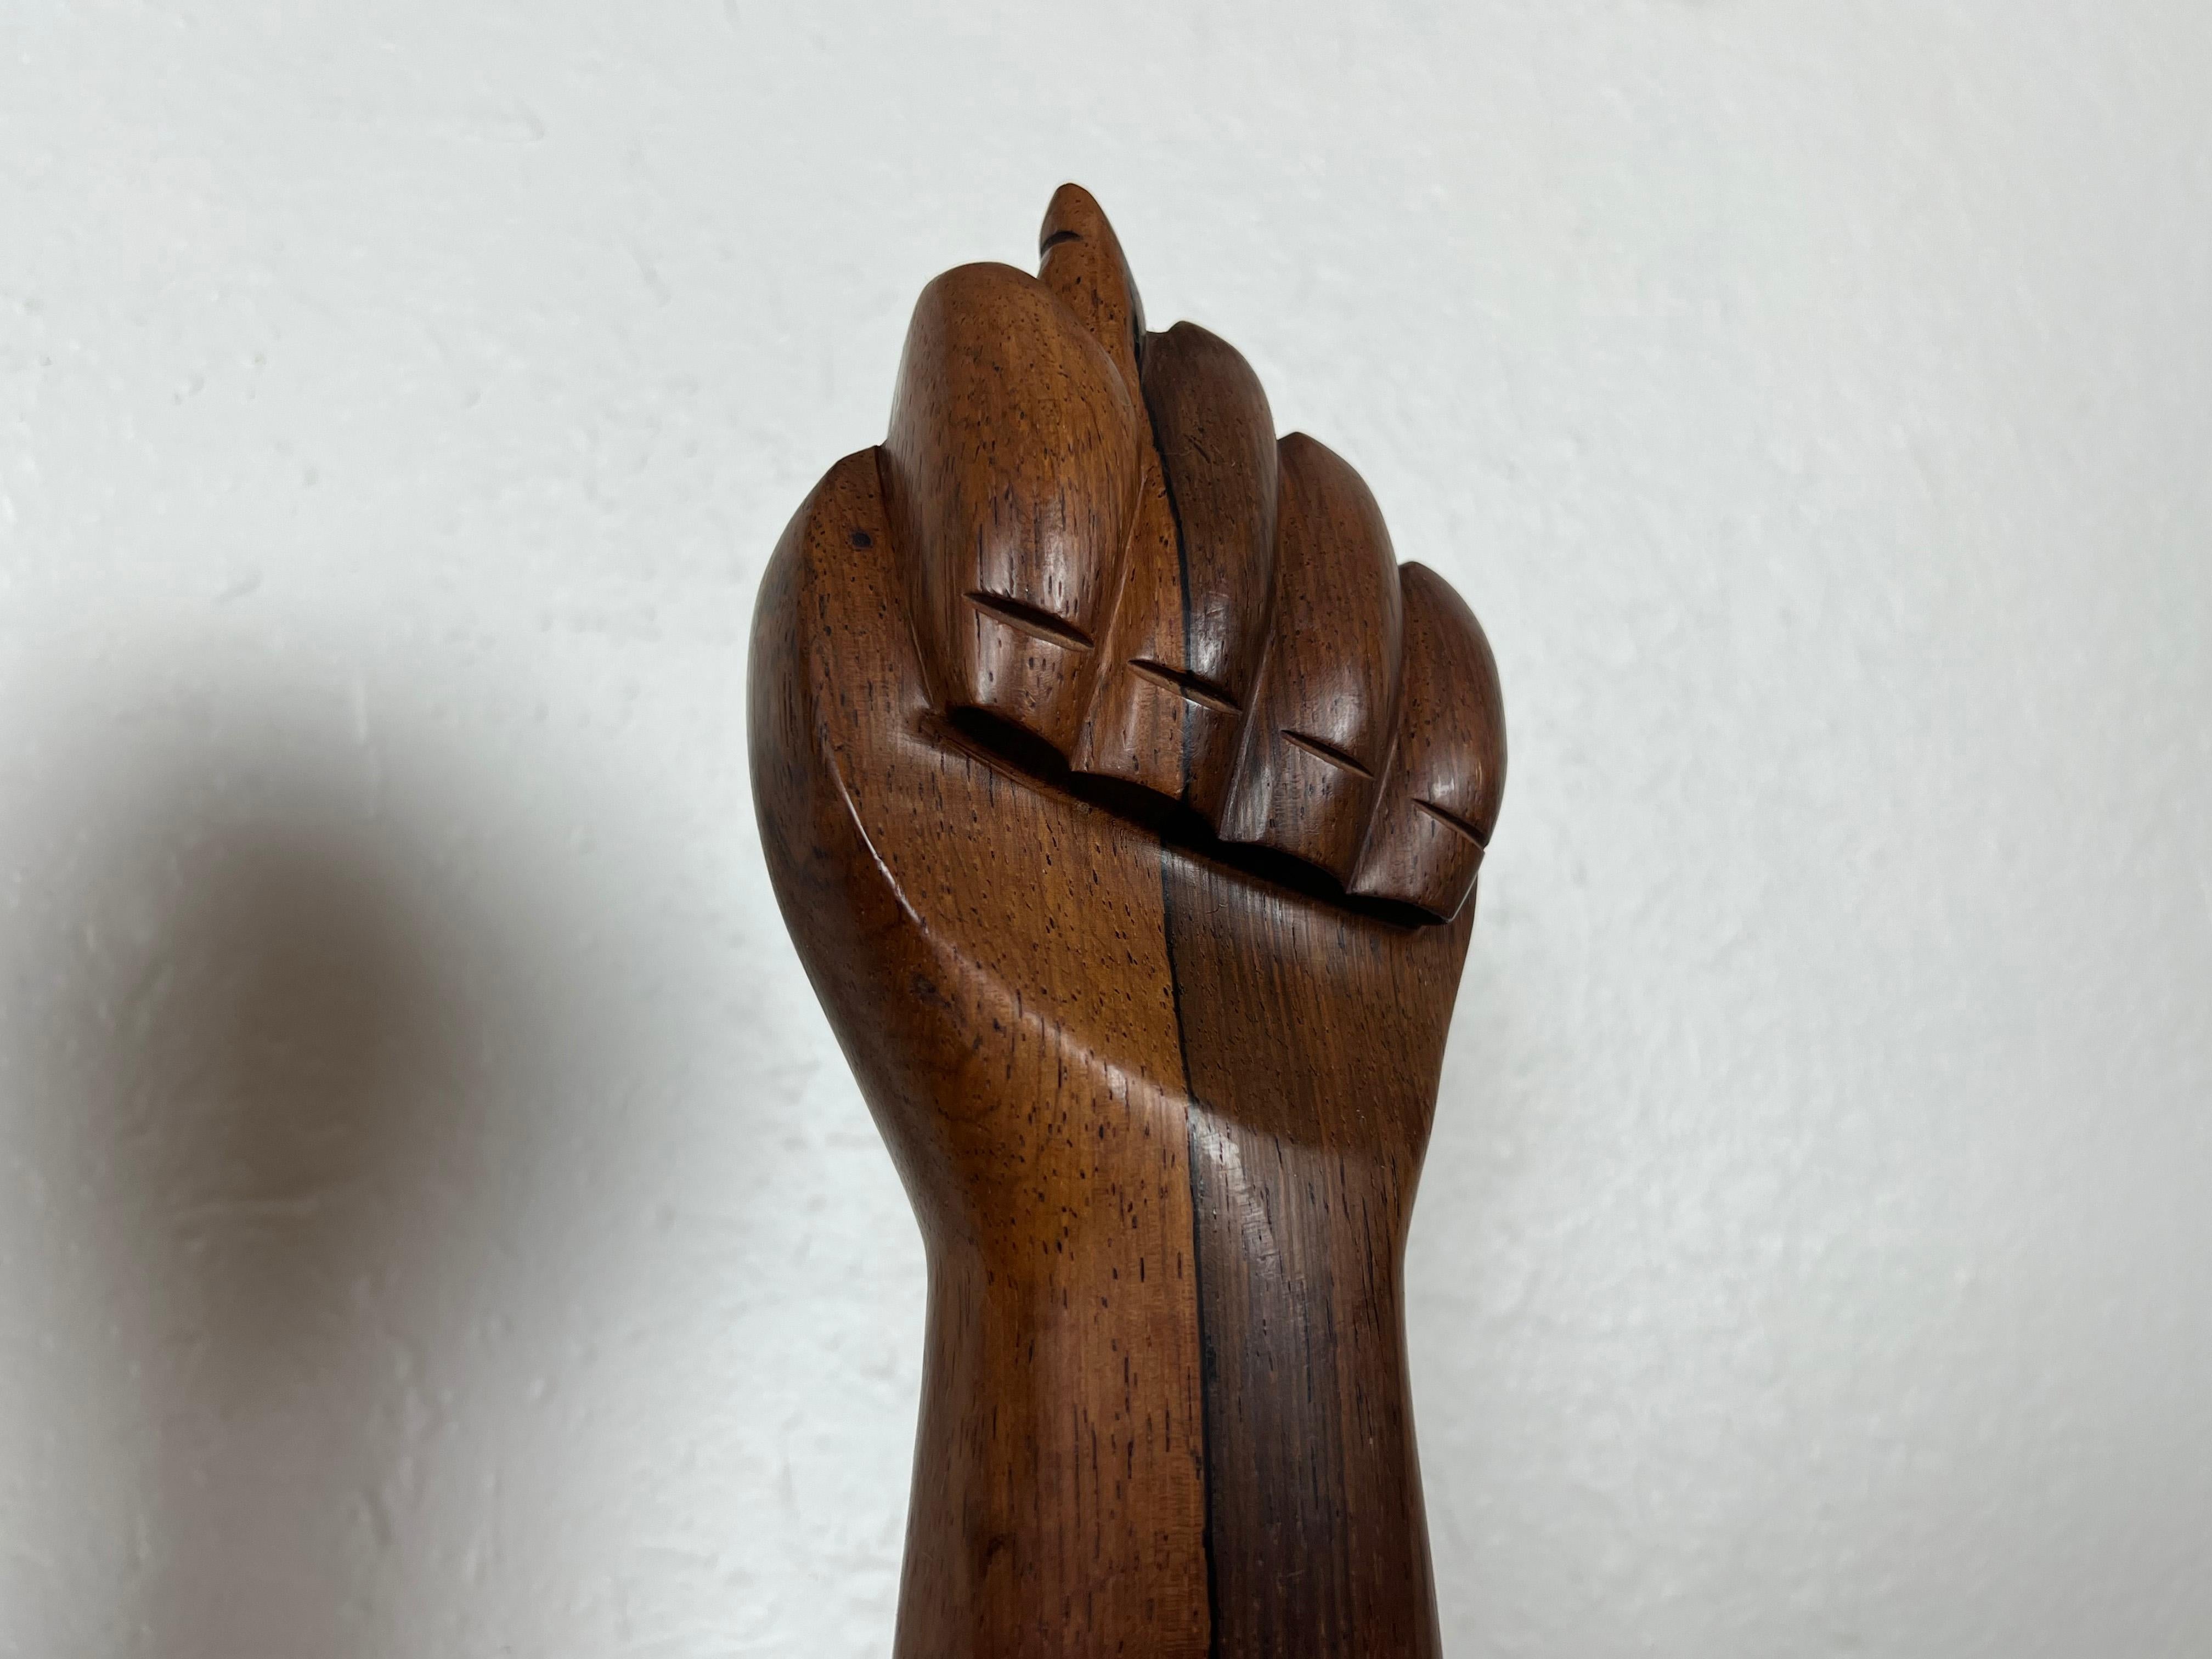 20th Century Brazilian Jacaranda Rosewood Hand Sculptures by Jac-Arte - a Pair